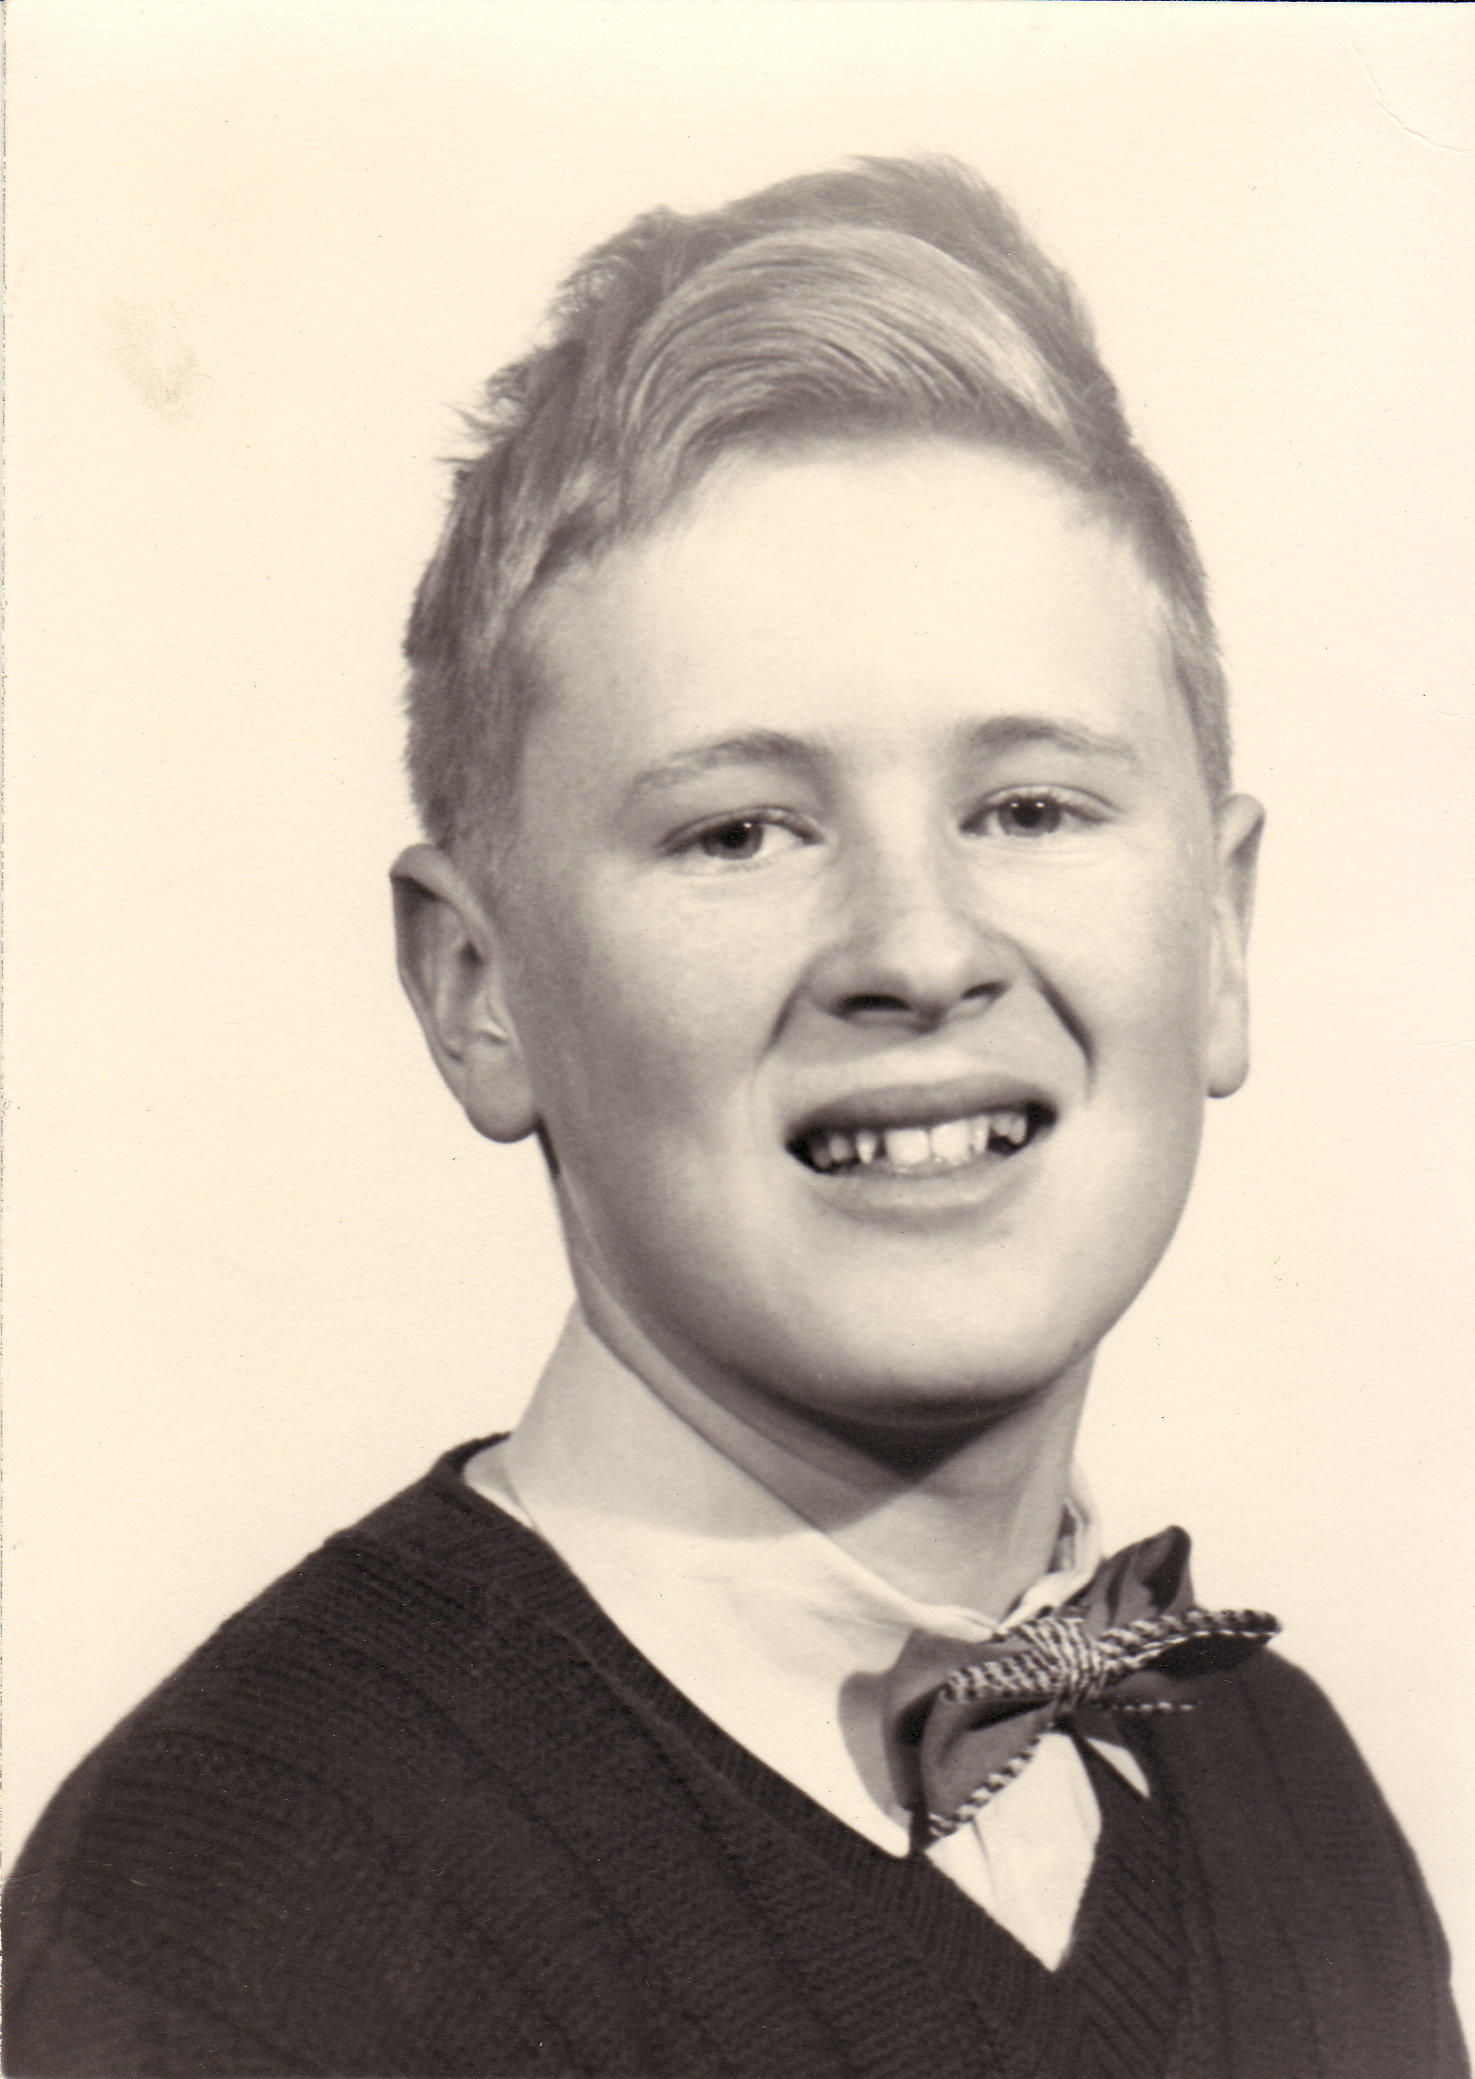 School Picture, 1954